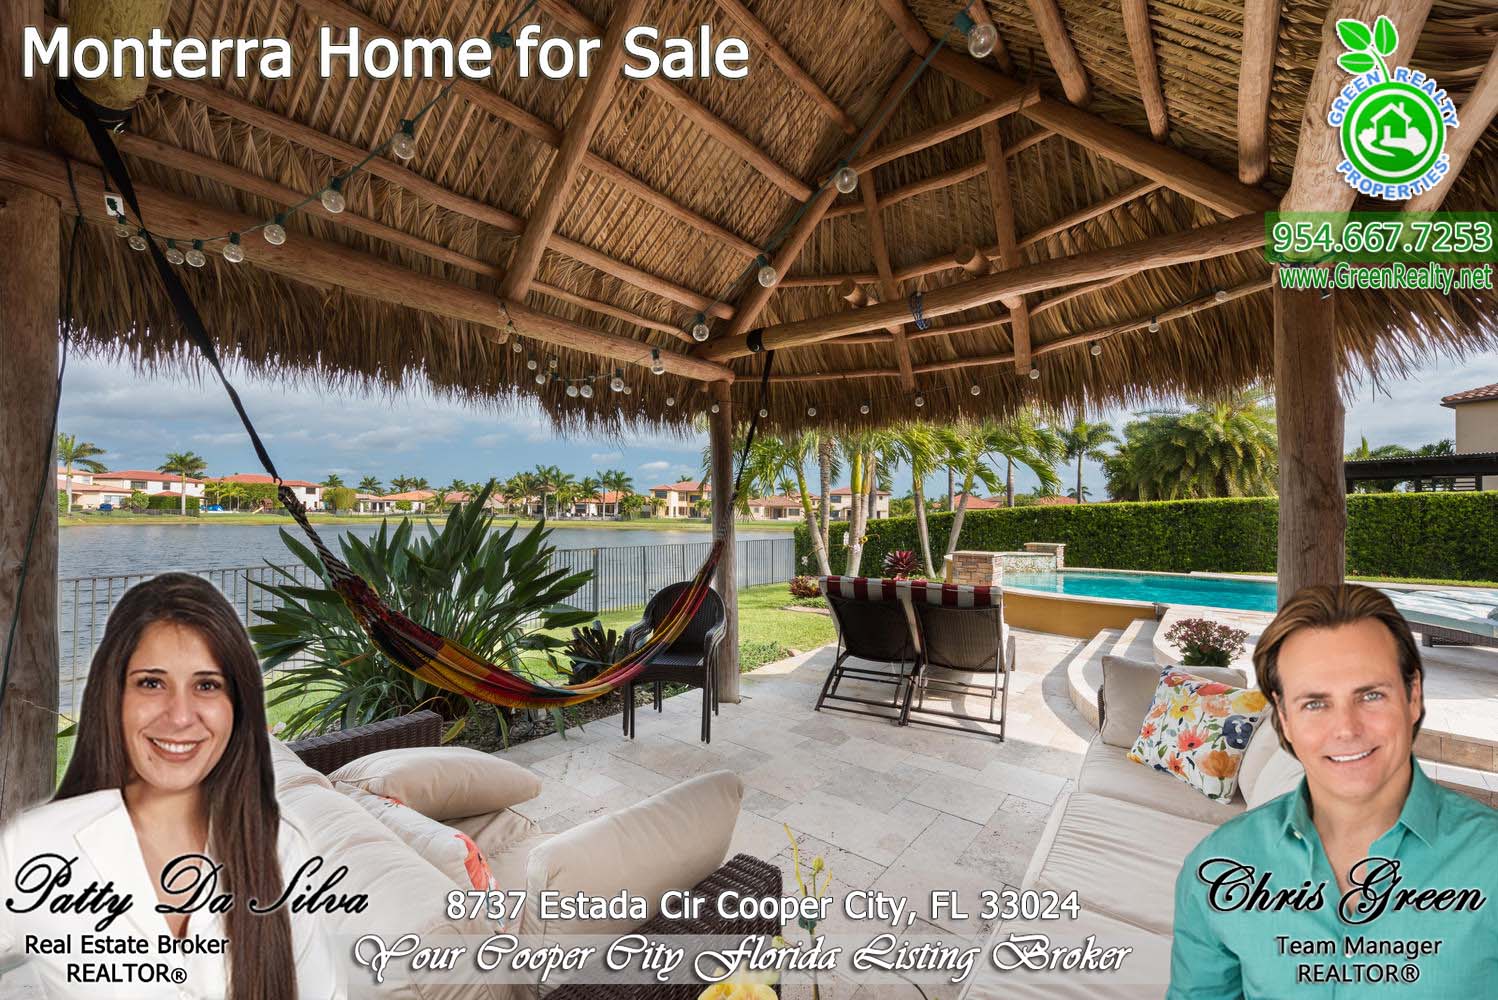 28 Monterra Home for Sale South Florida